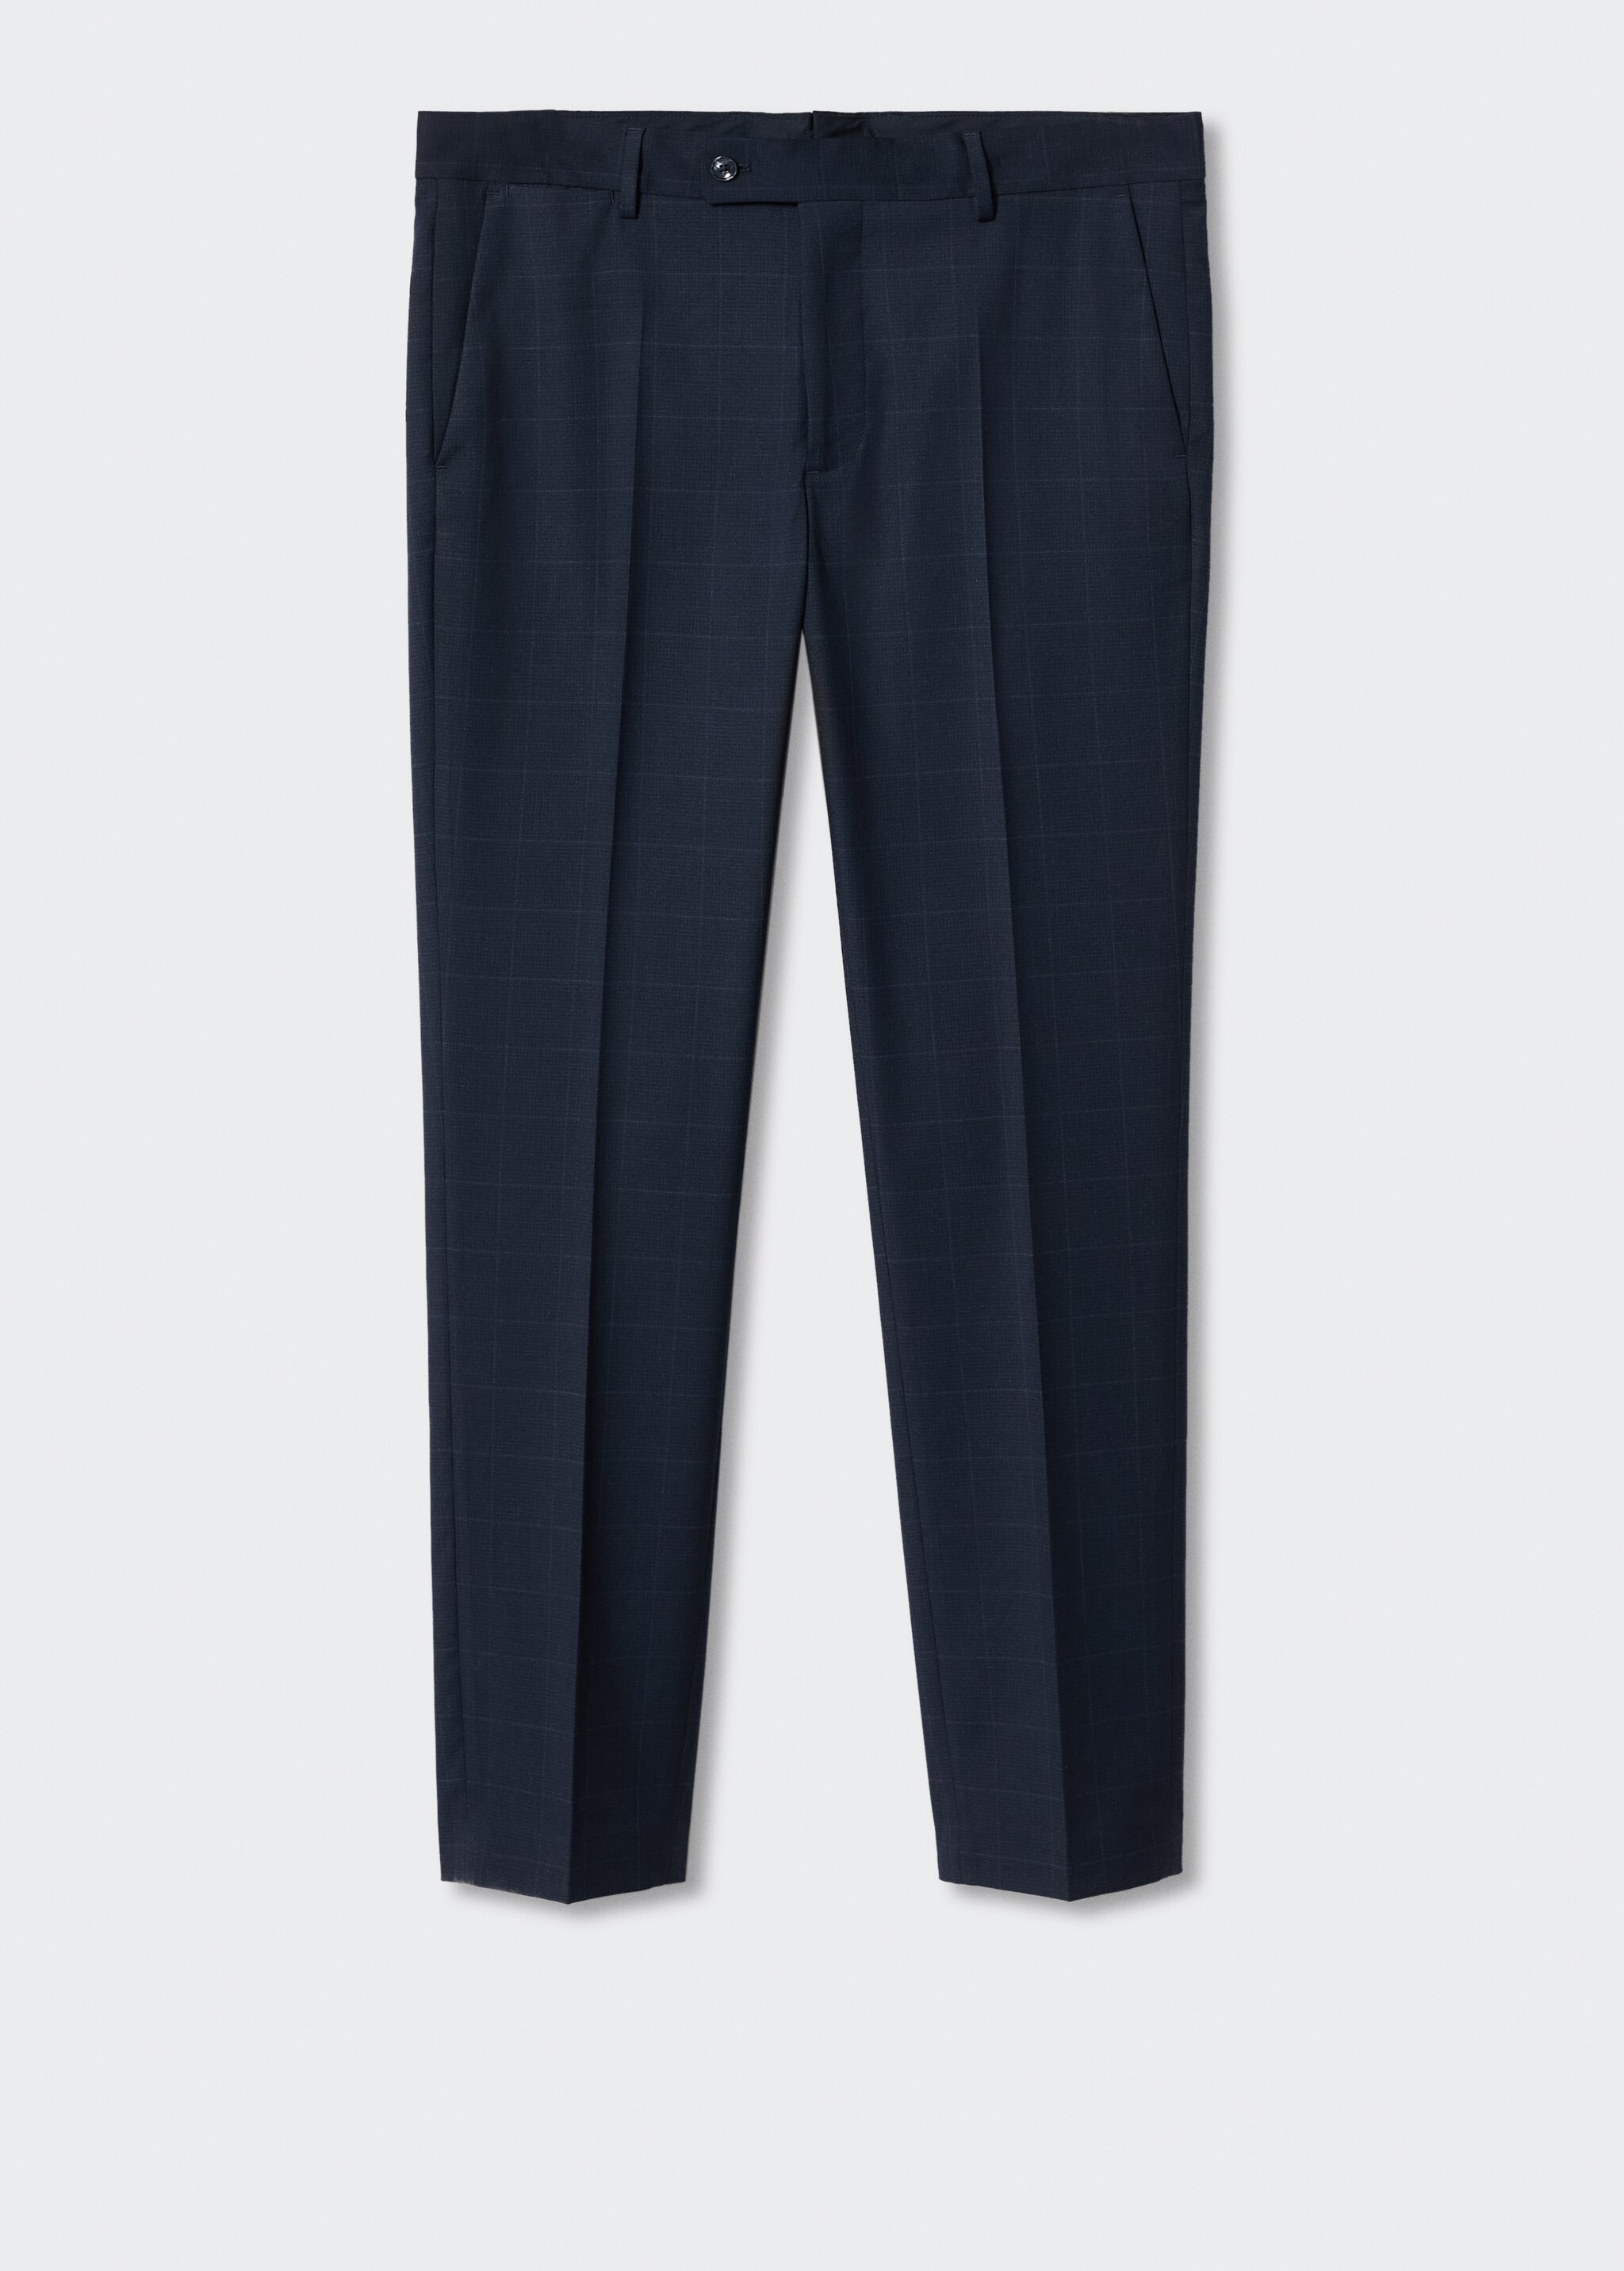 Pantalons vestir slim fit quadres - Article sense model